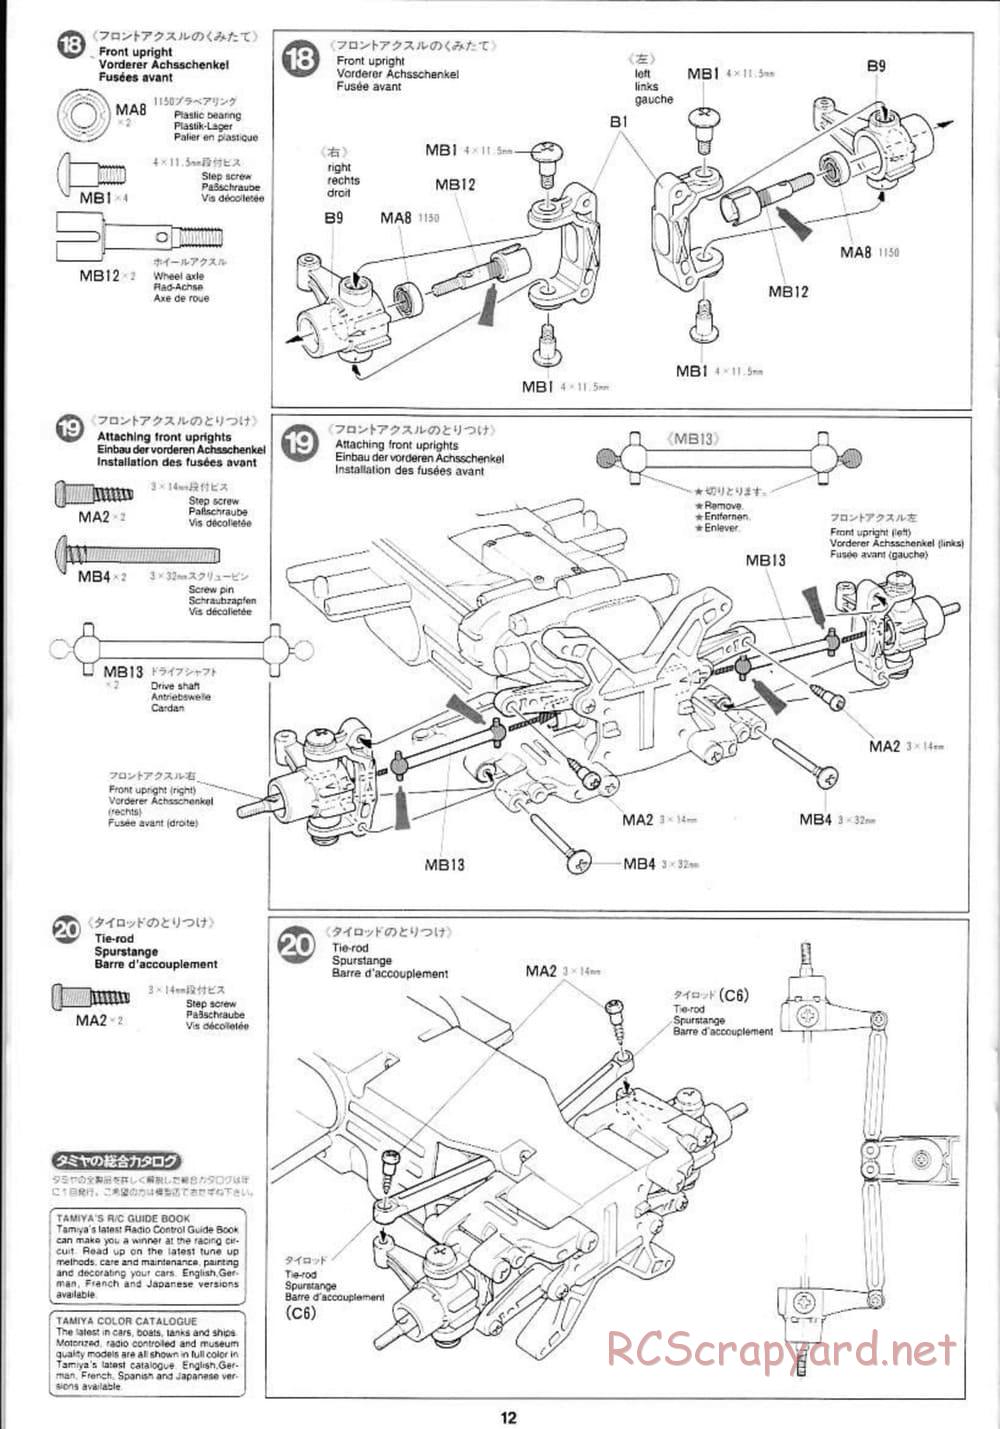 Tamiya - Ford Escort WRC - TL-01 Chassis - Manual - Page 12